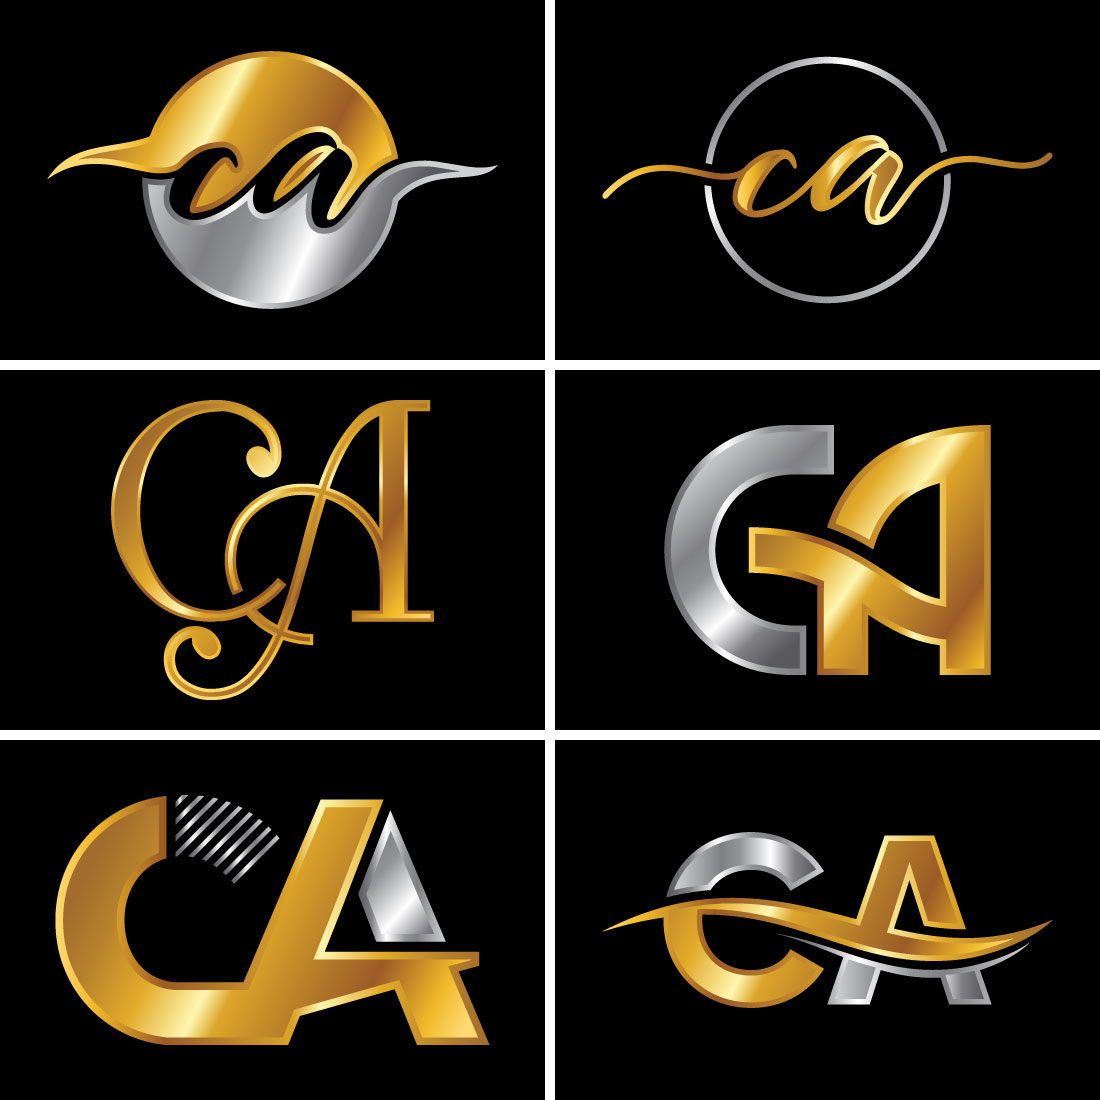 C A Initial Letter Logo Design main cover.